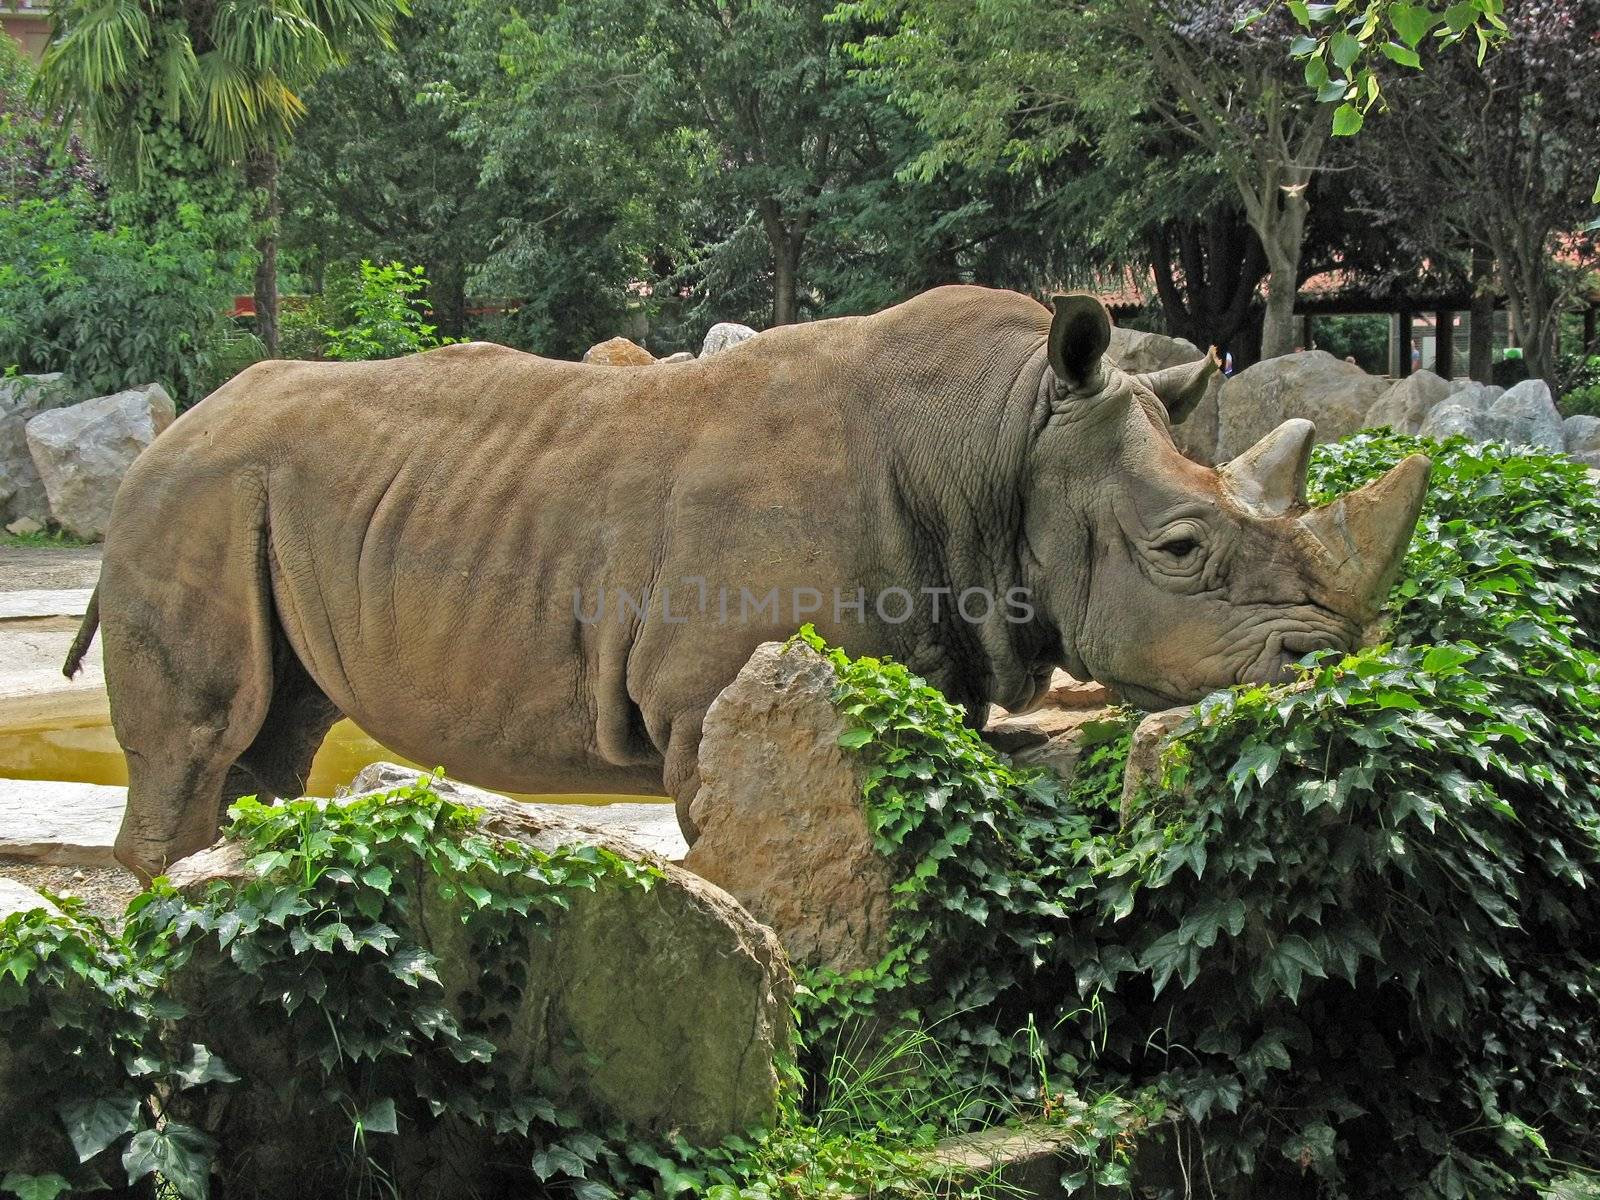 Rhinoceros that sunbathe with his head resting on the rocks